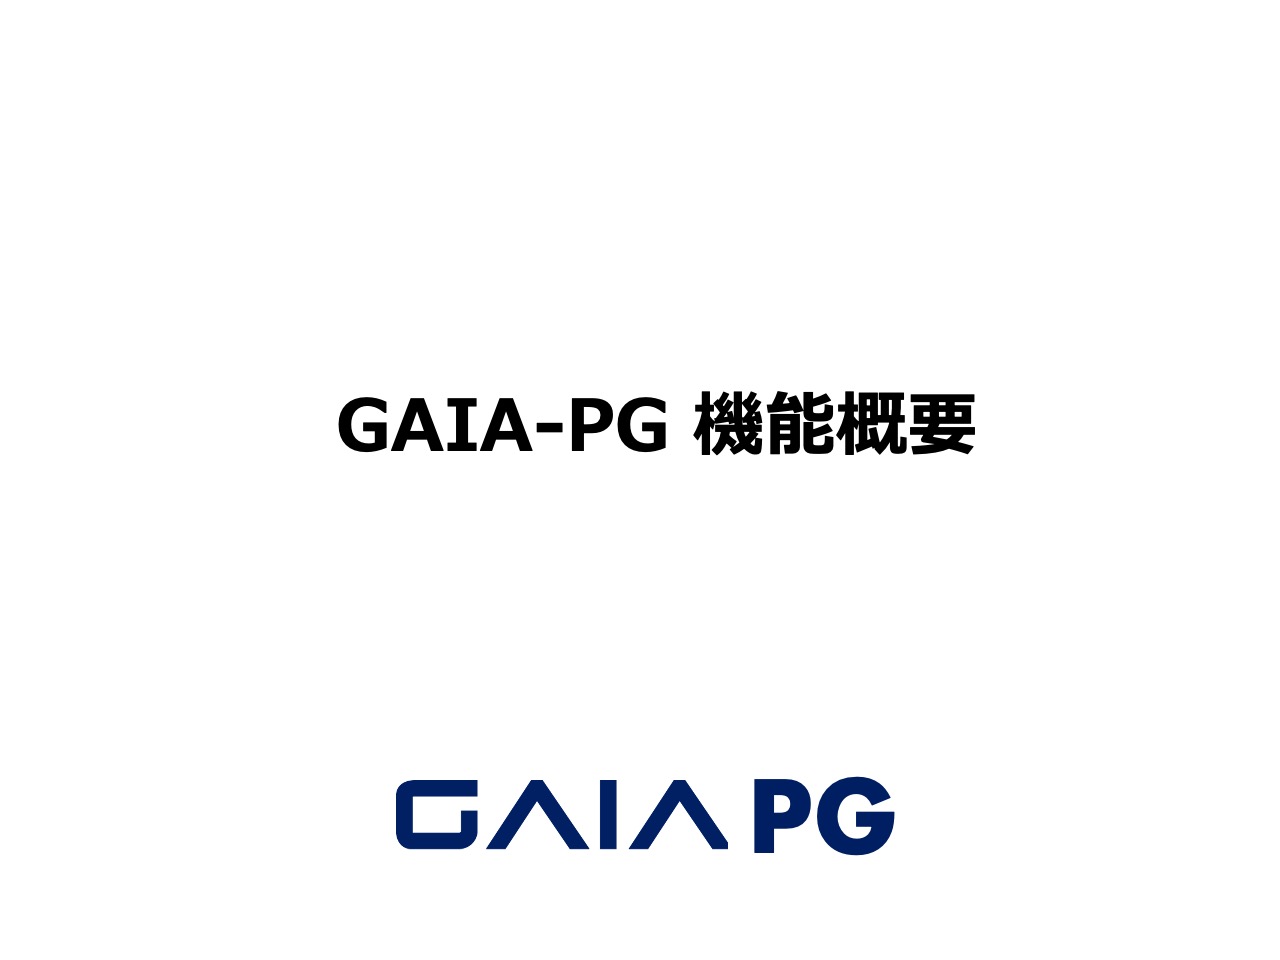 07-GAIAーPG機能概要20200507pptx